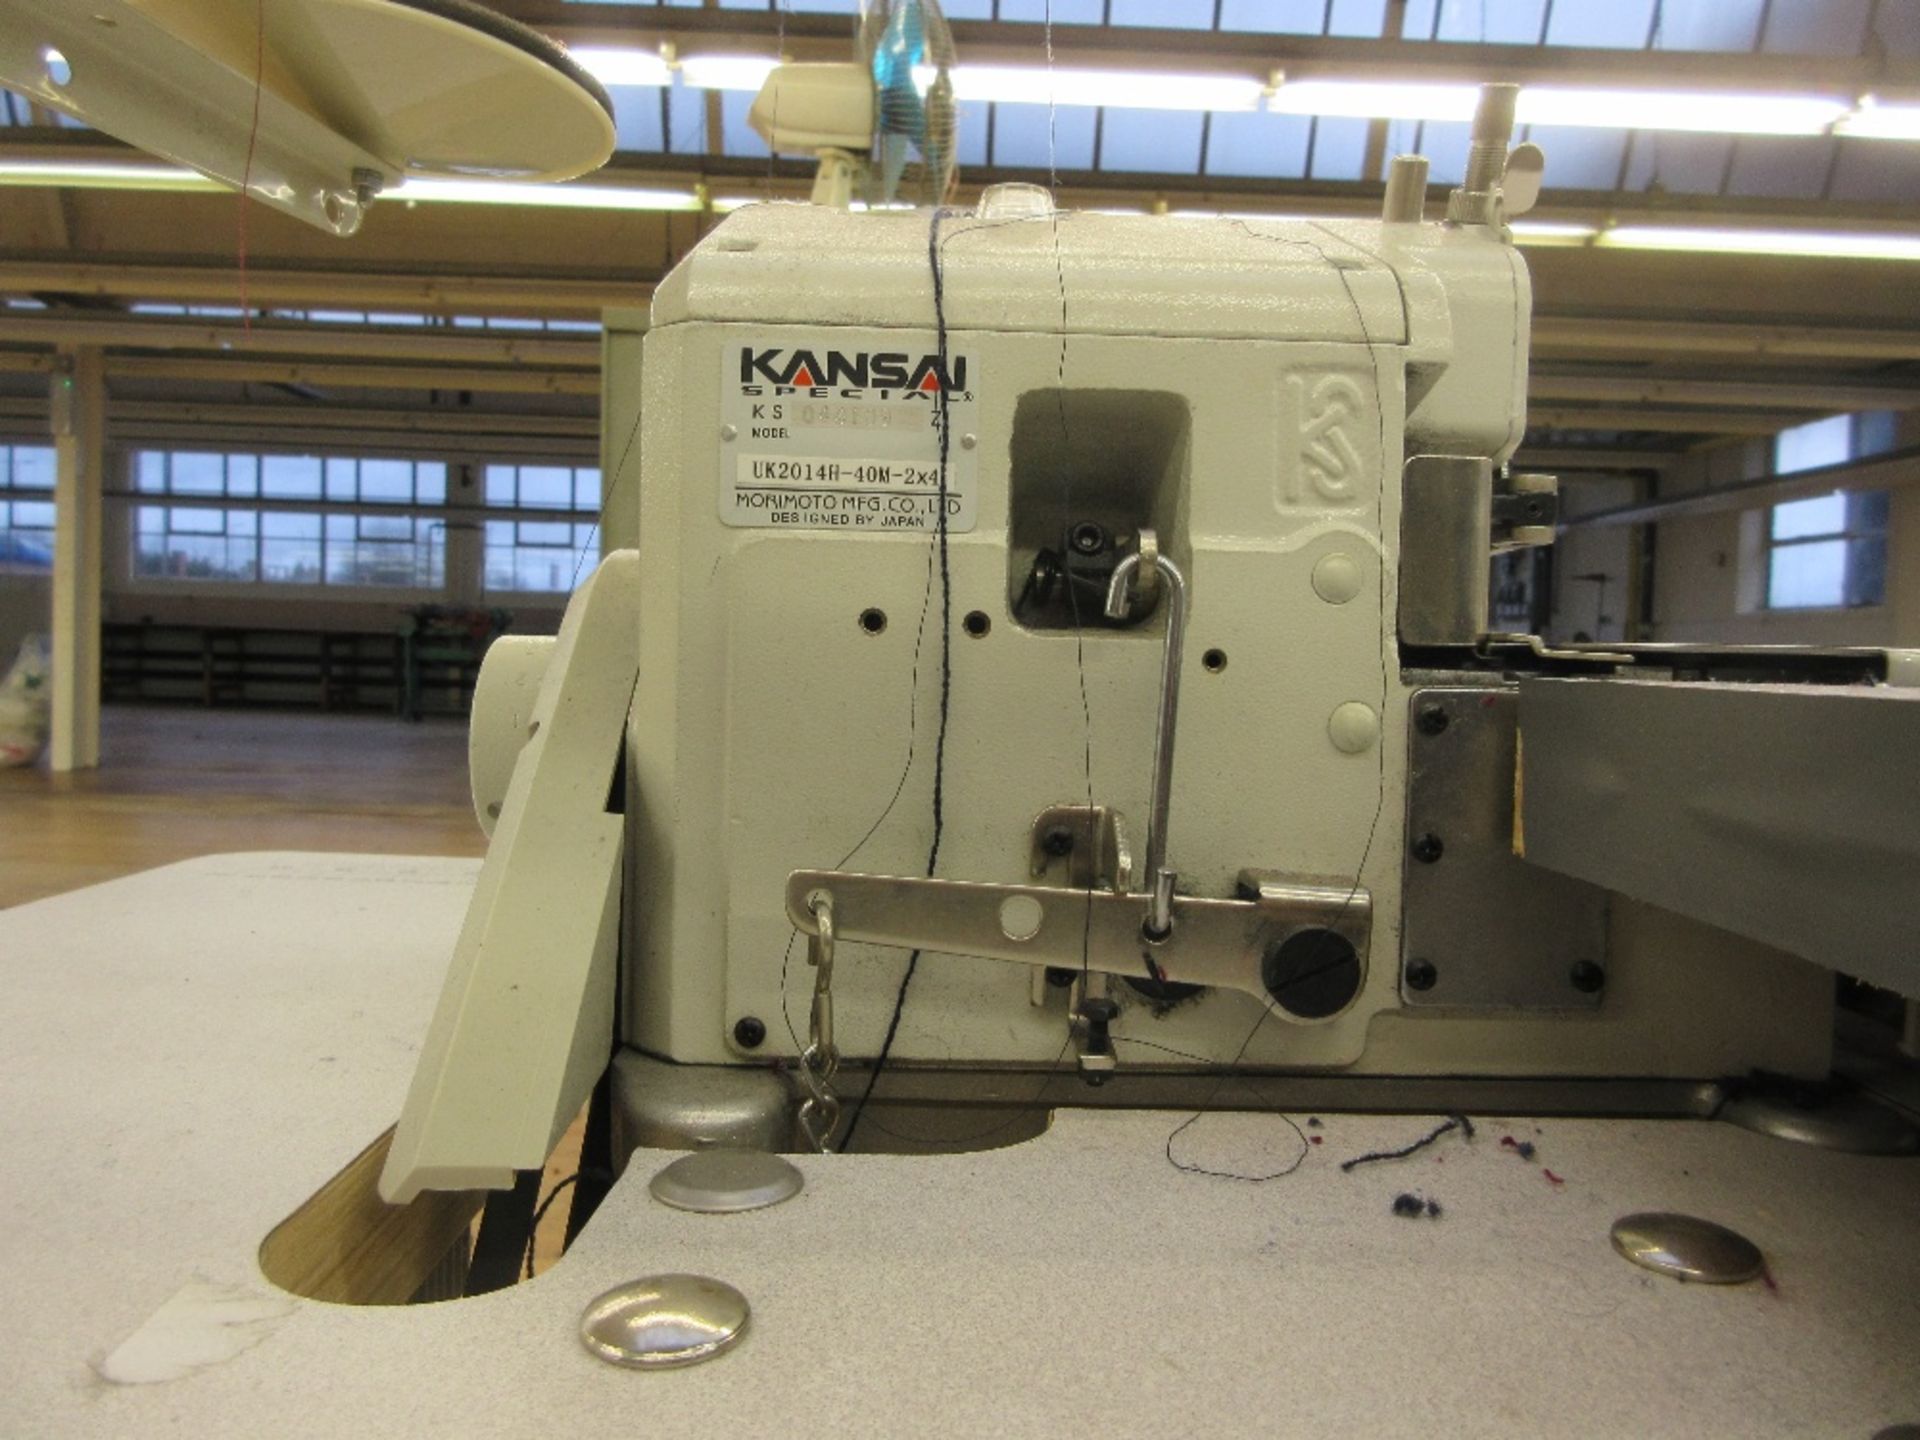 Kansai special, model. UK2014H-40M- 2 x 4 Overlocker. Serial No. KS044109 - Image 4 of 4